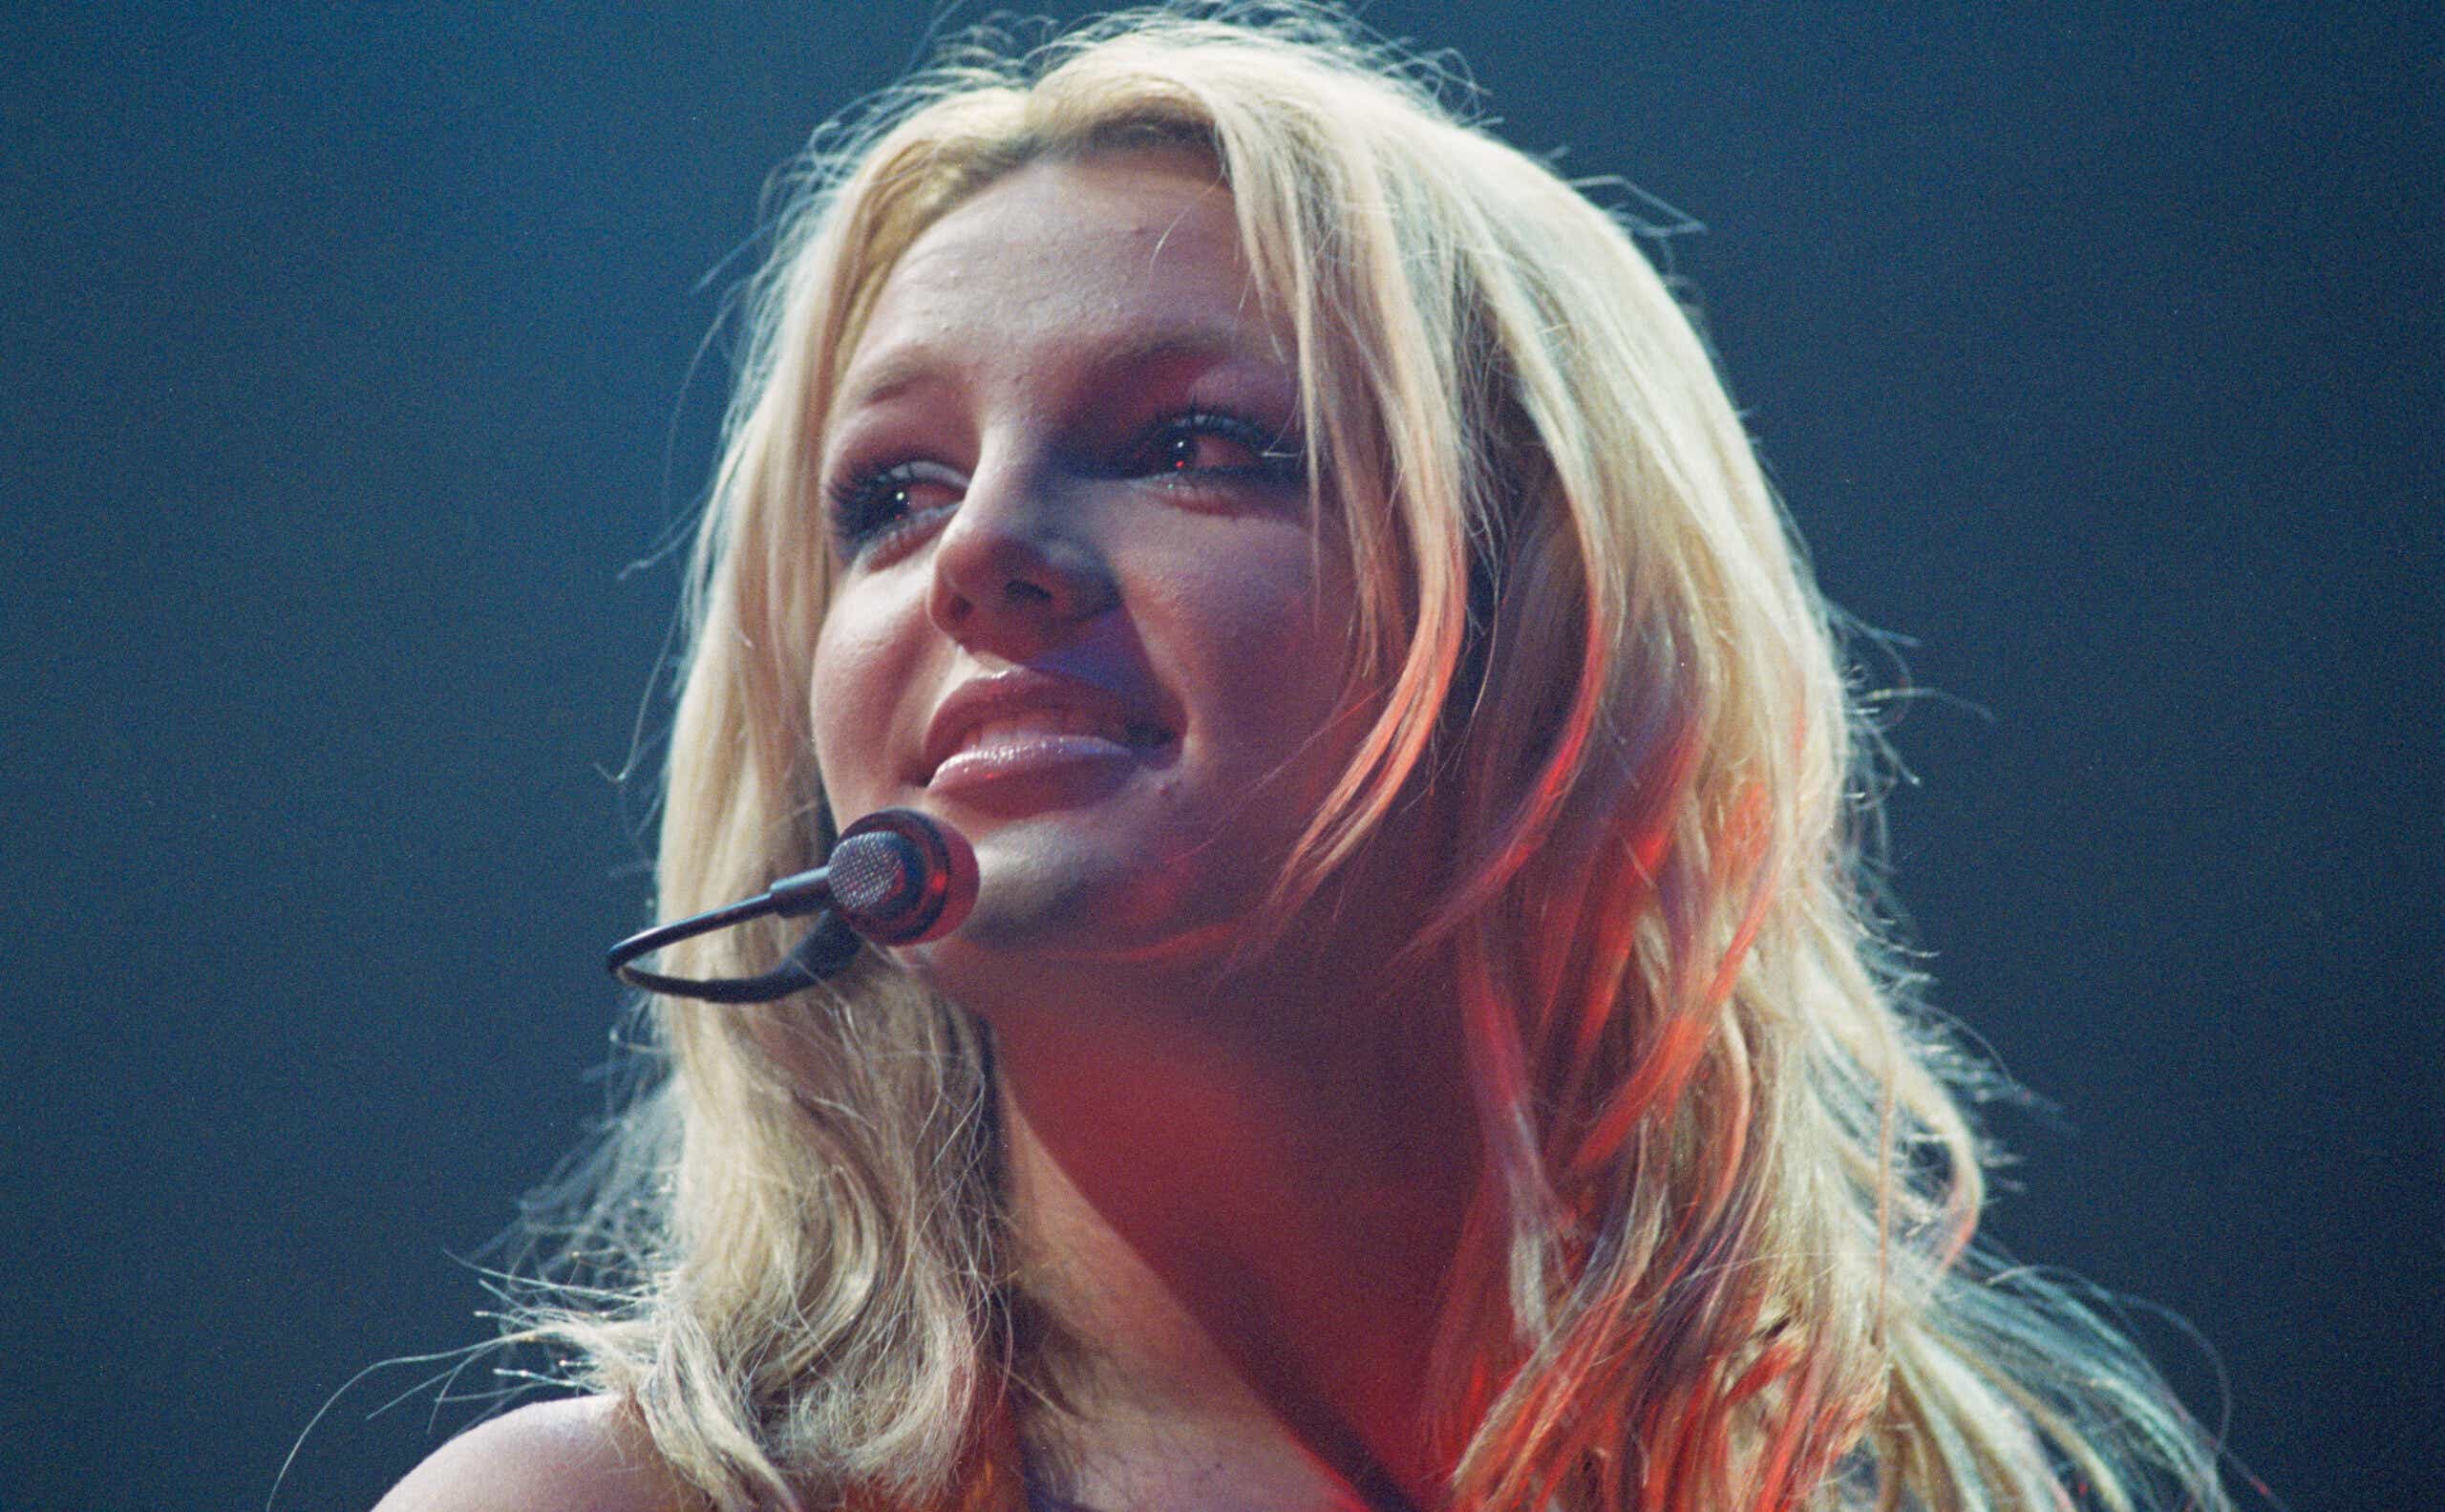 Britney on stage